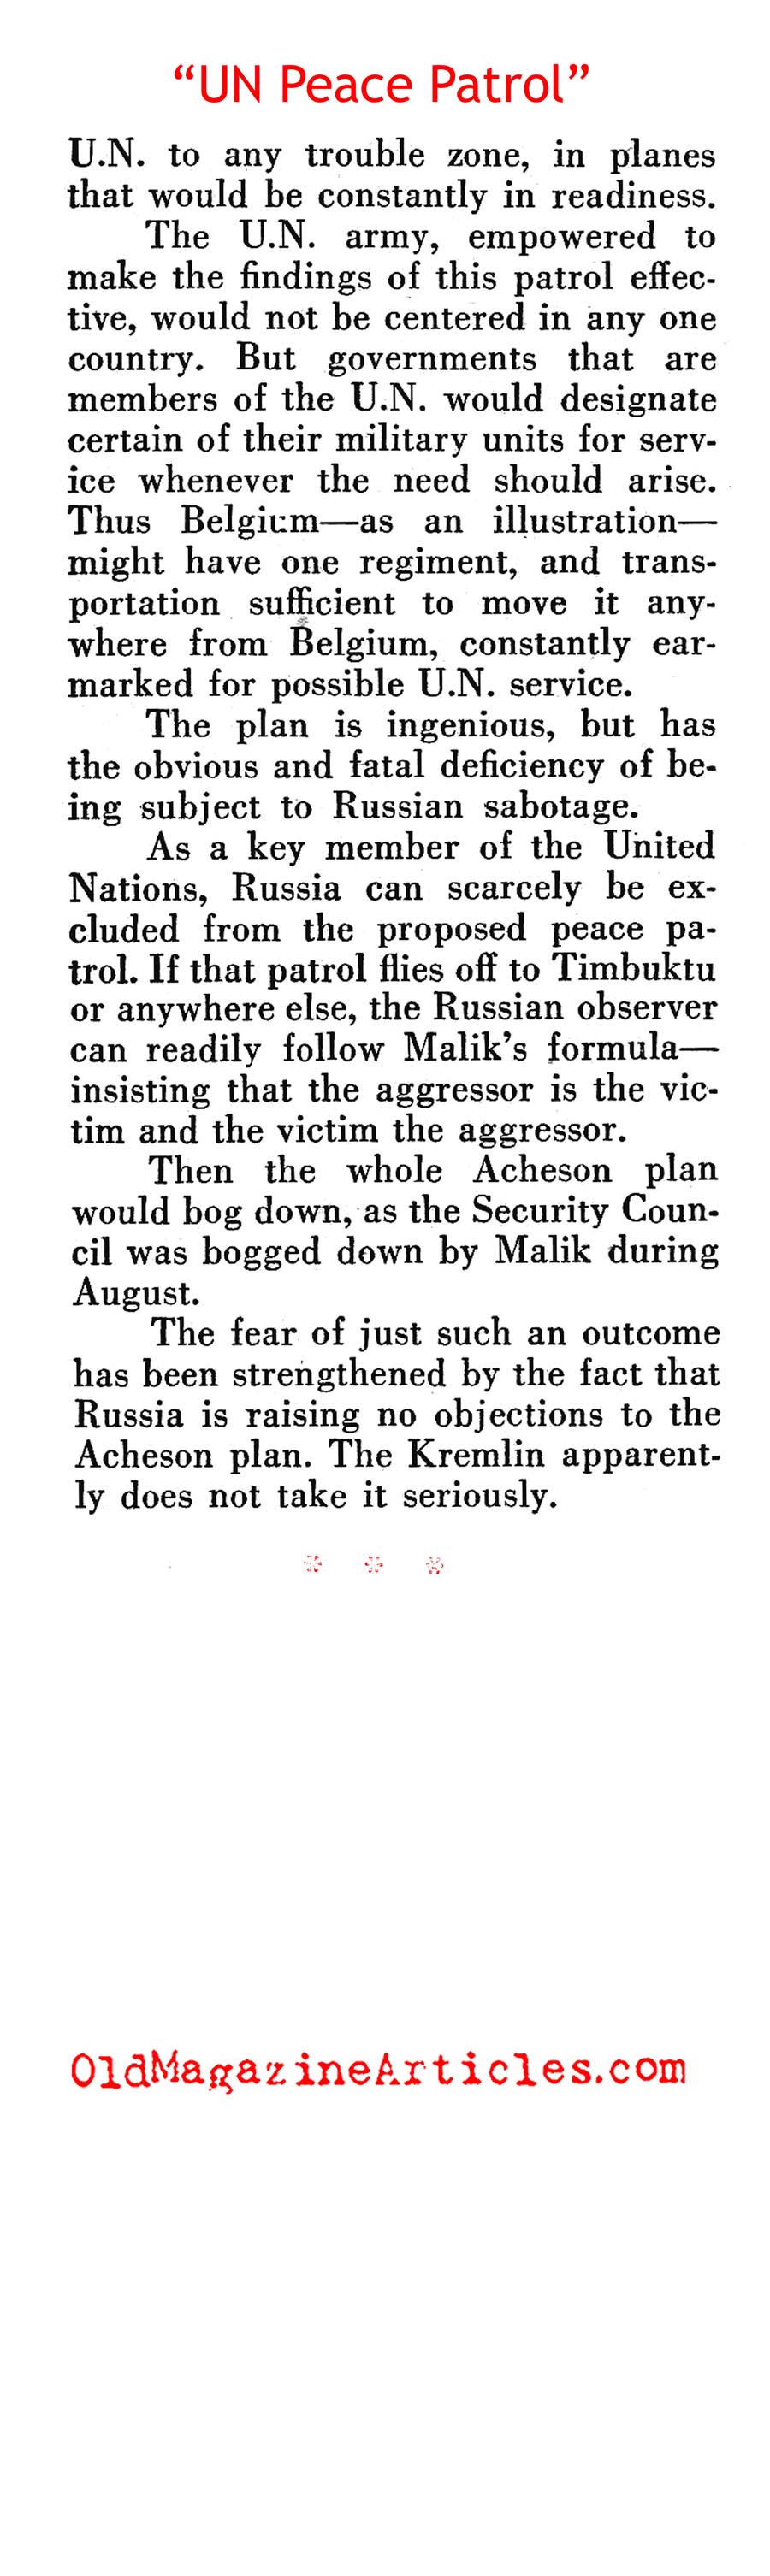 Let The UN Keep The Peace (Pathfinder Magazine, 1950)